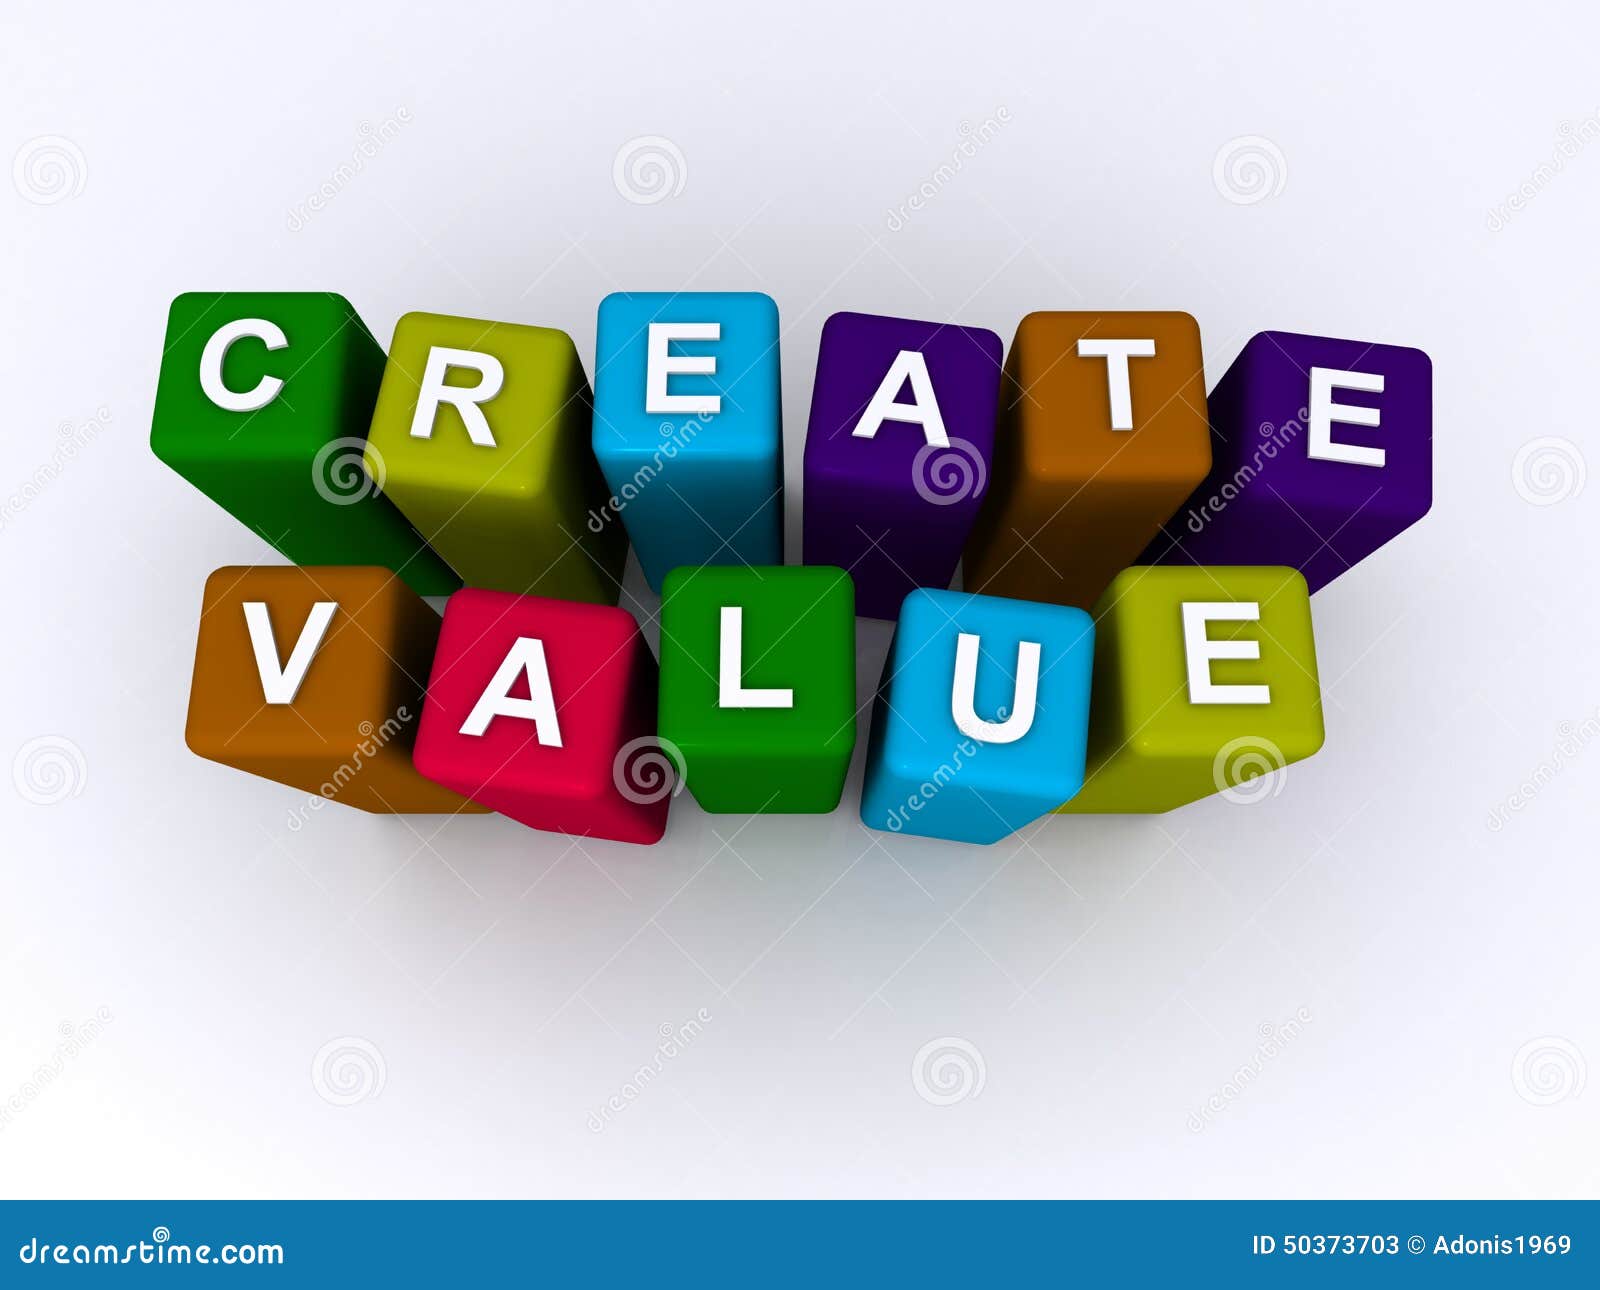 create value spelled in blocks